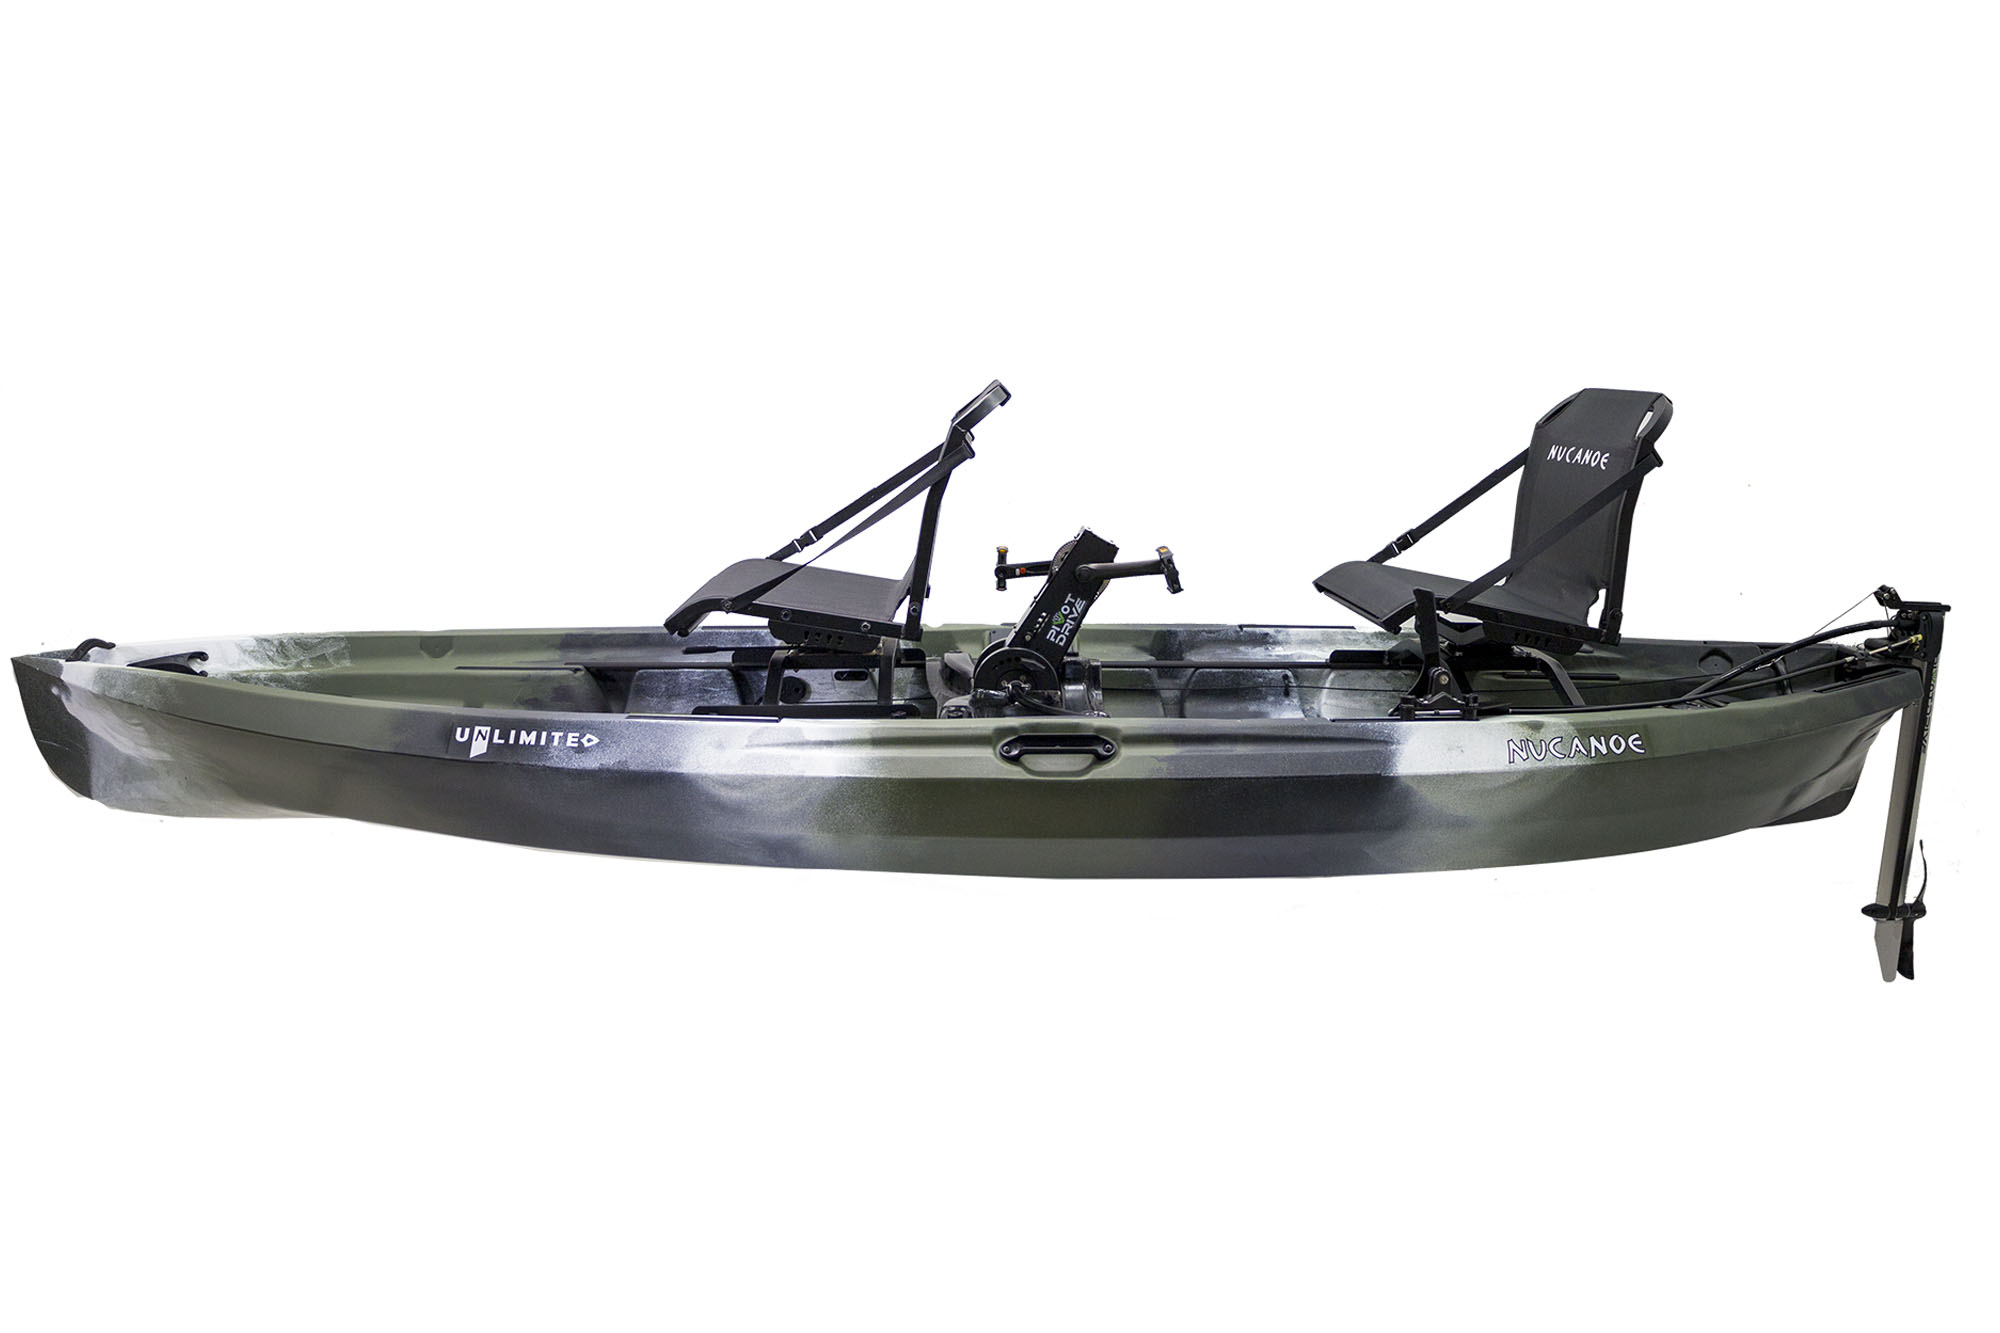 223x – PIVOT Drive Tandem Conversion Kit, Kayaks, Fishing, Hunting